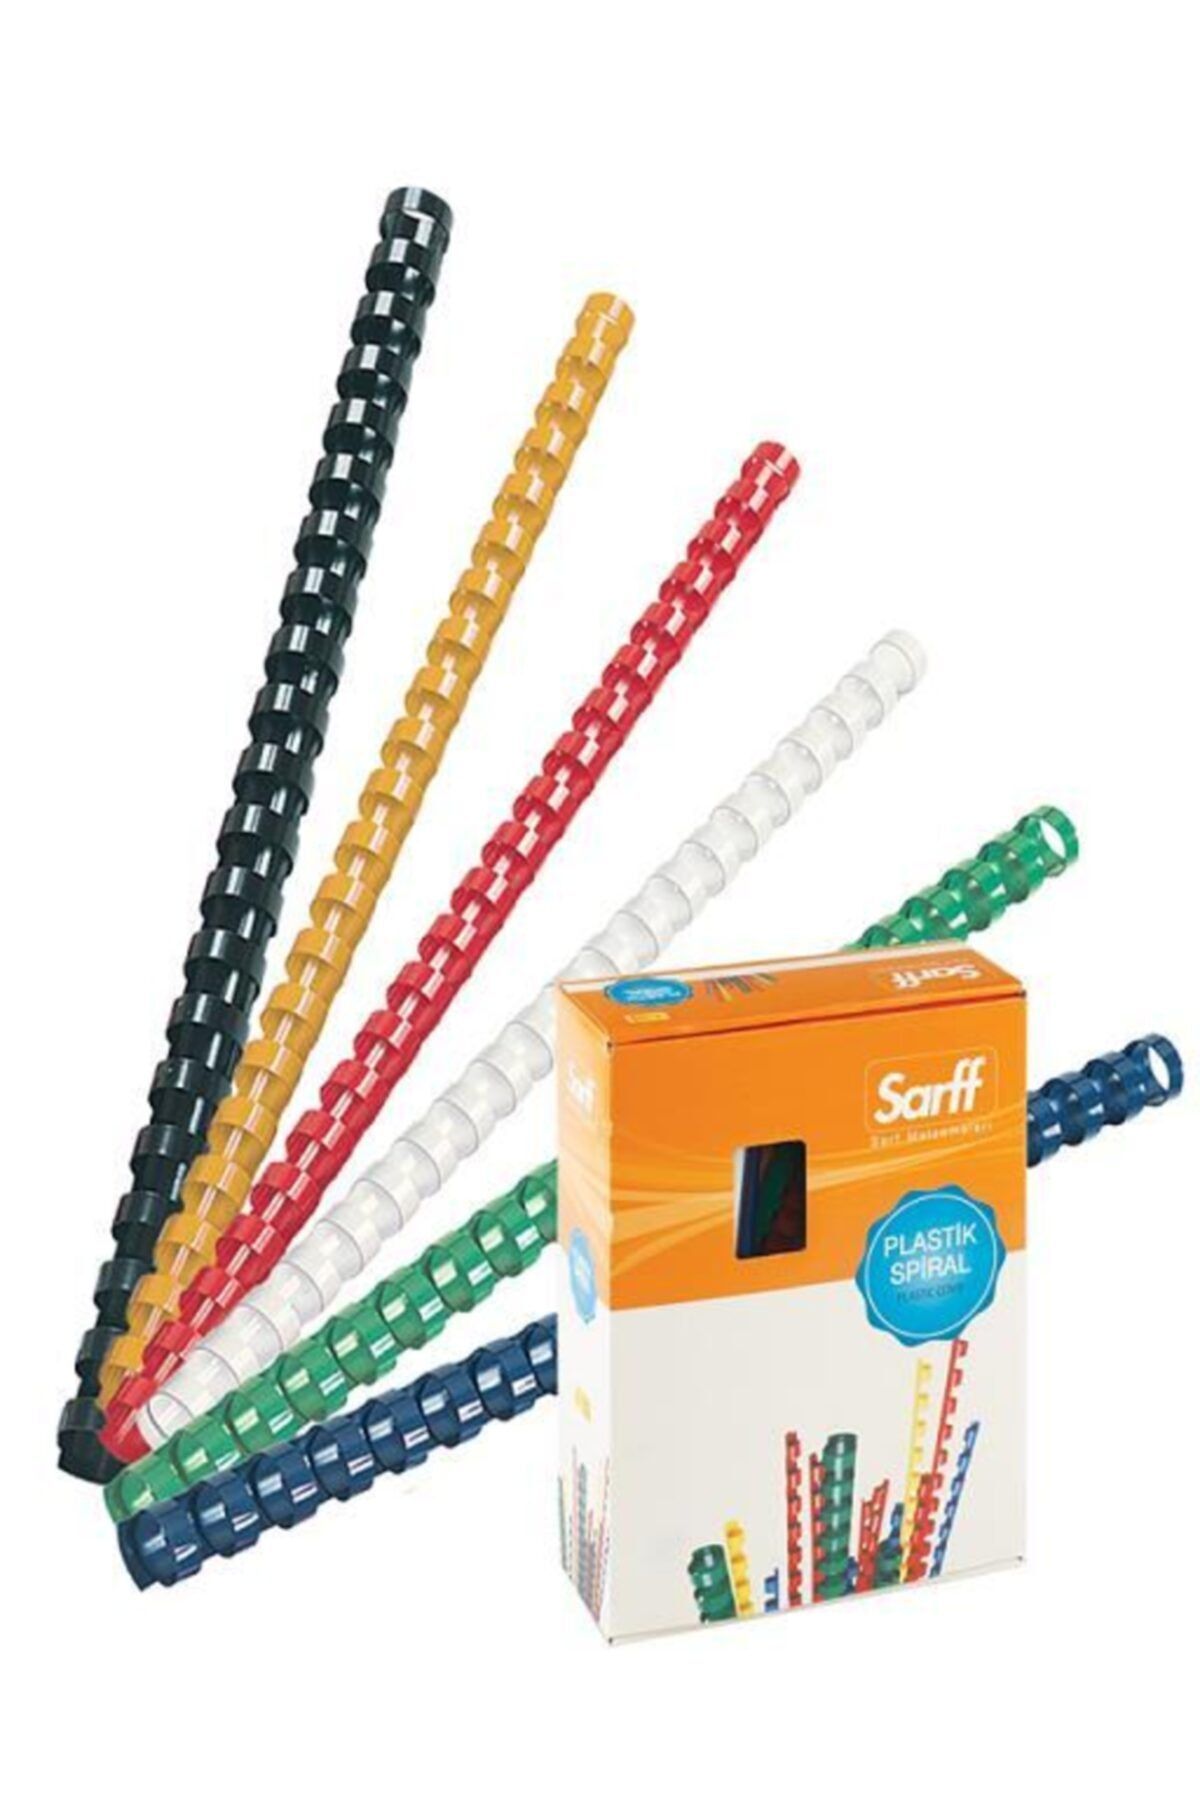 SARFF Plastik Spiral 12 Mm Beyaz 100 Lü (1 Paket 100 Adet)